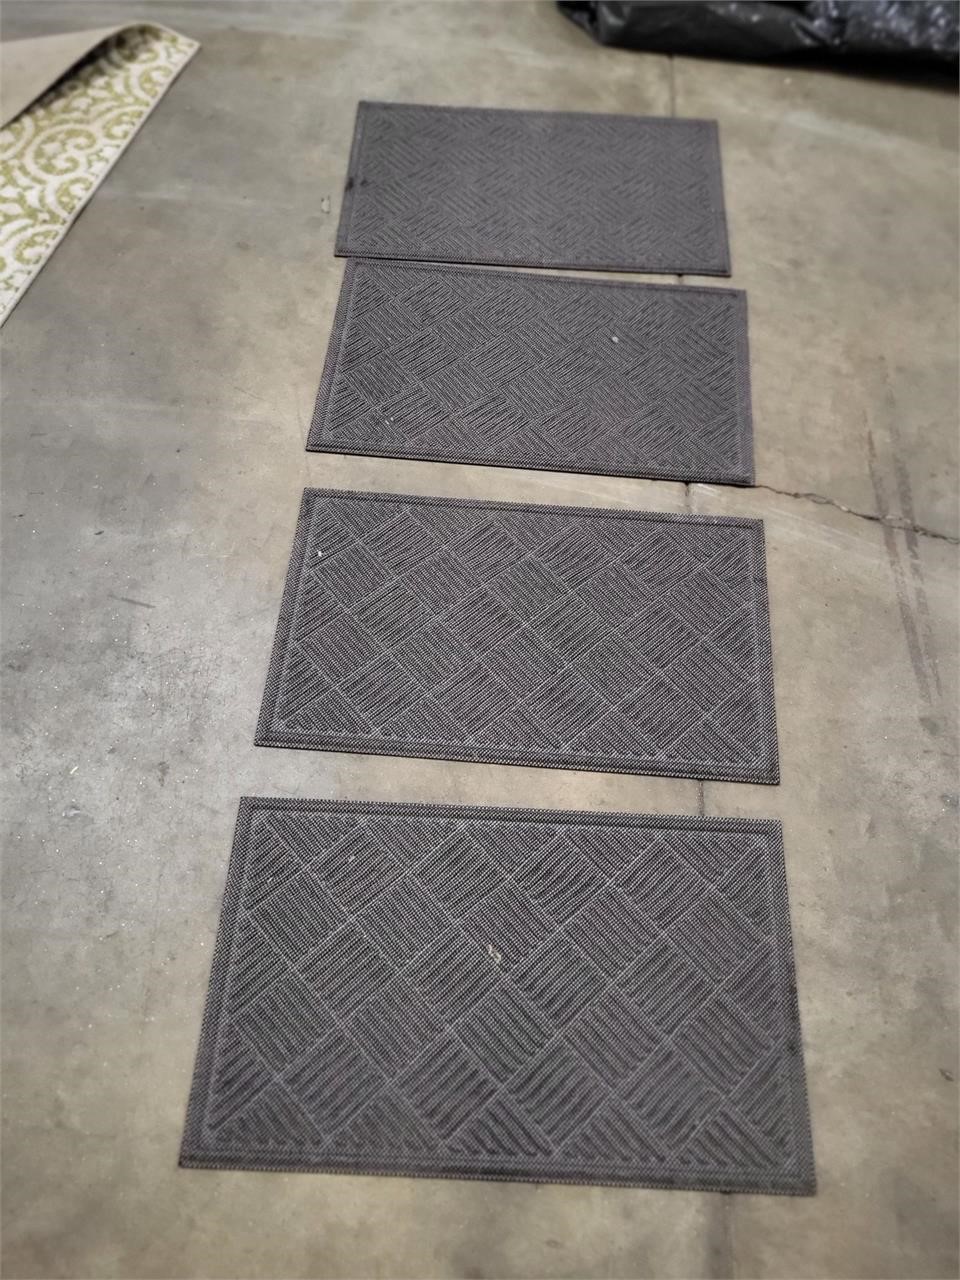 4 heavy duty floor mats